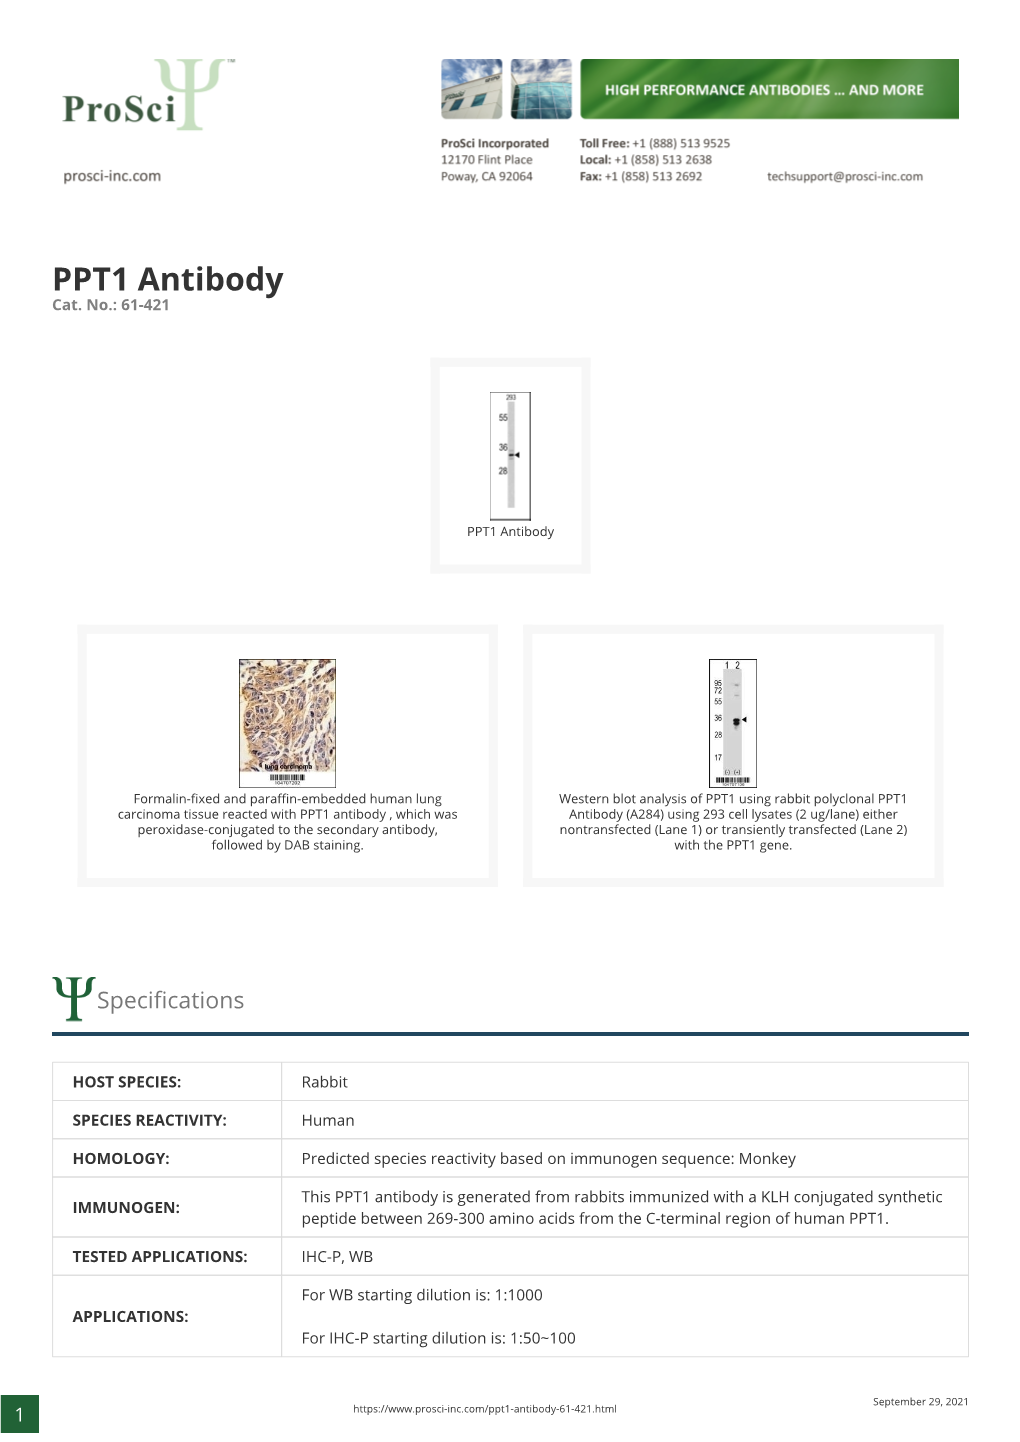 PPT1 Antibody Cat